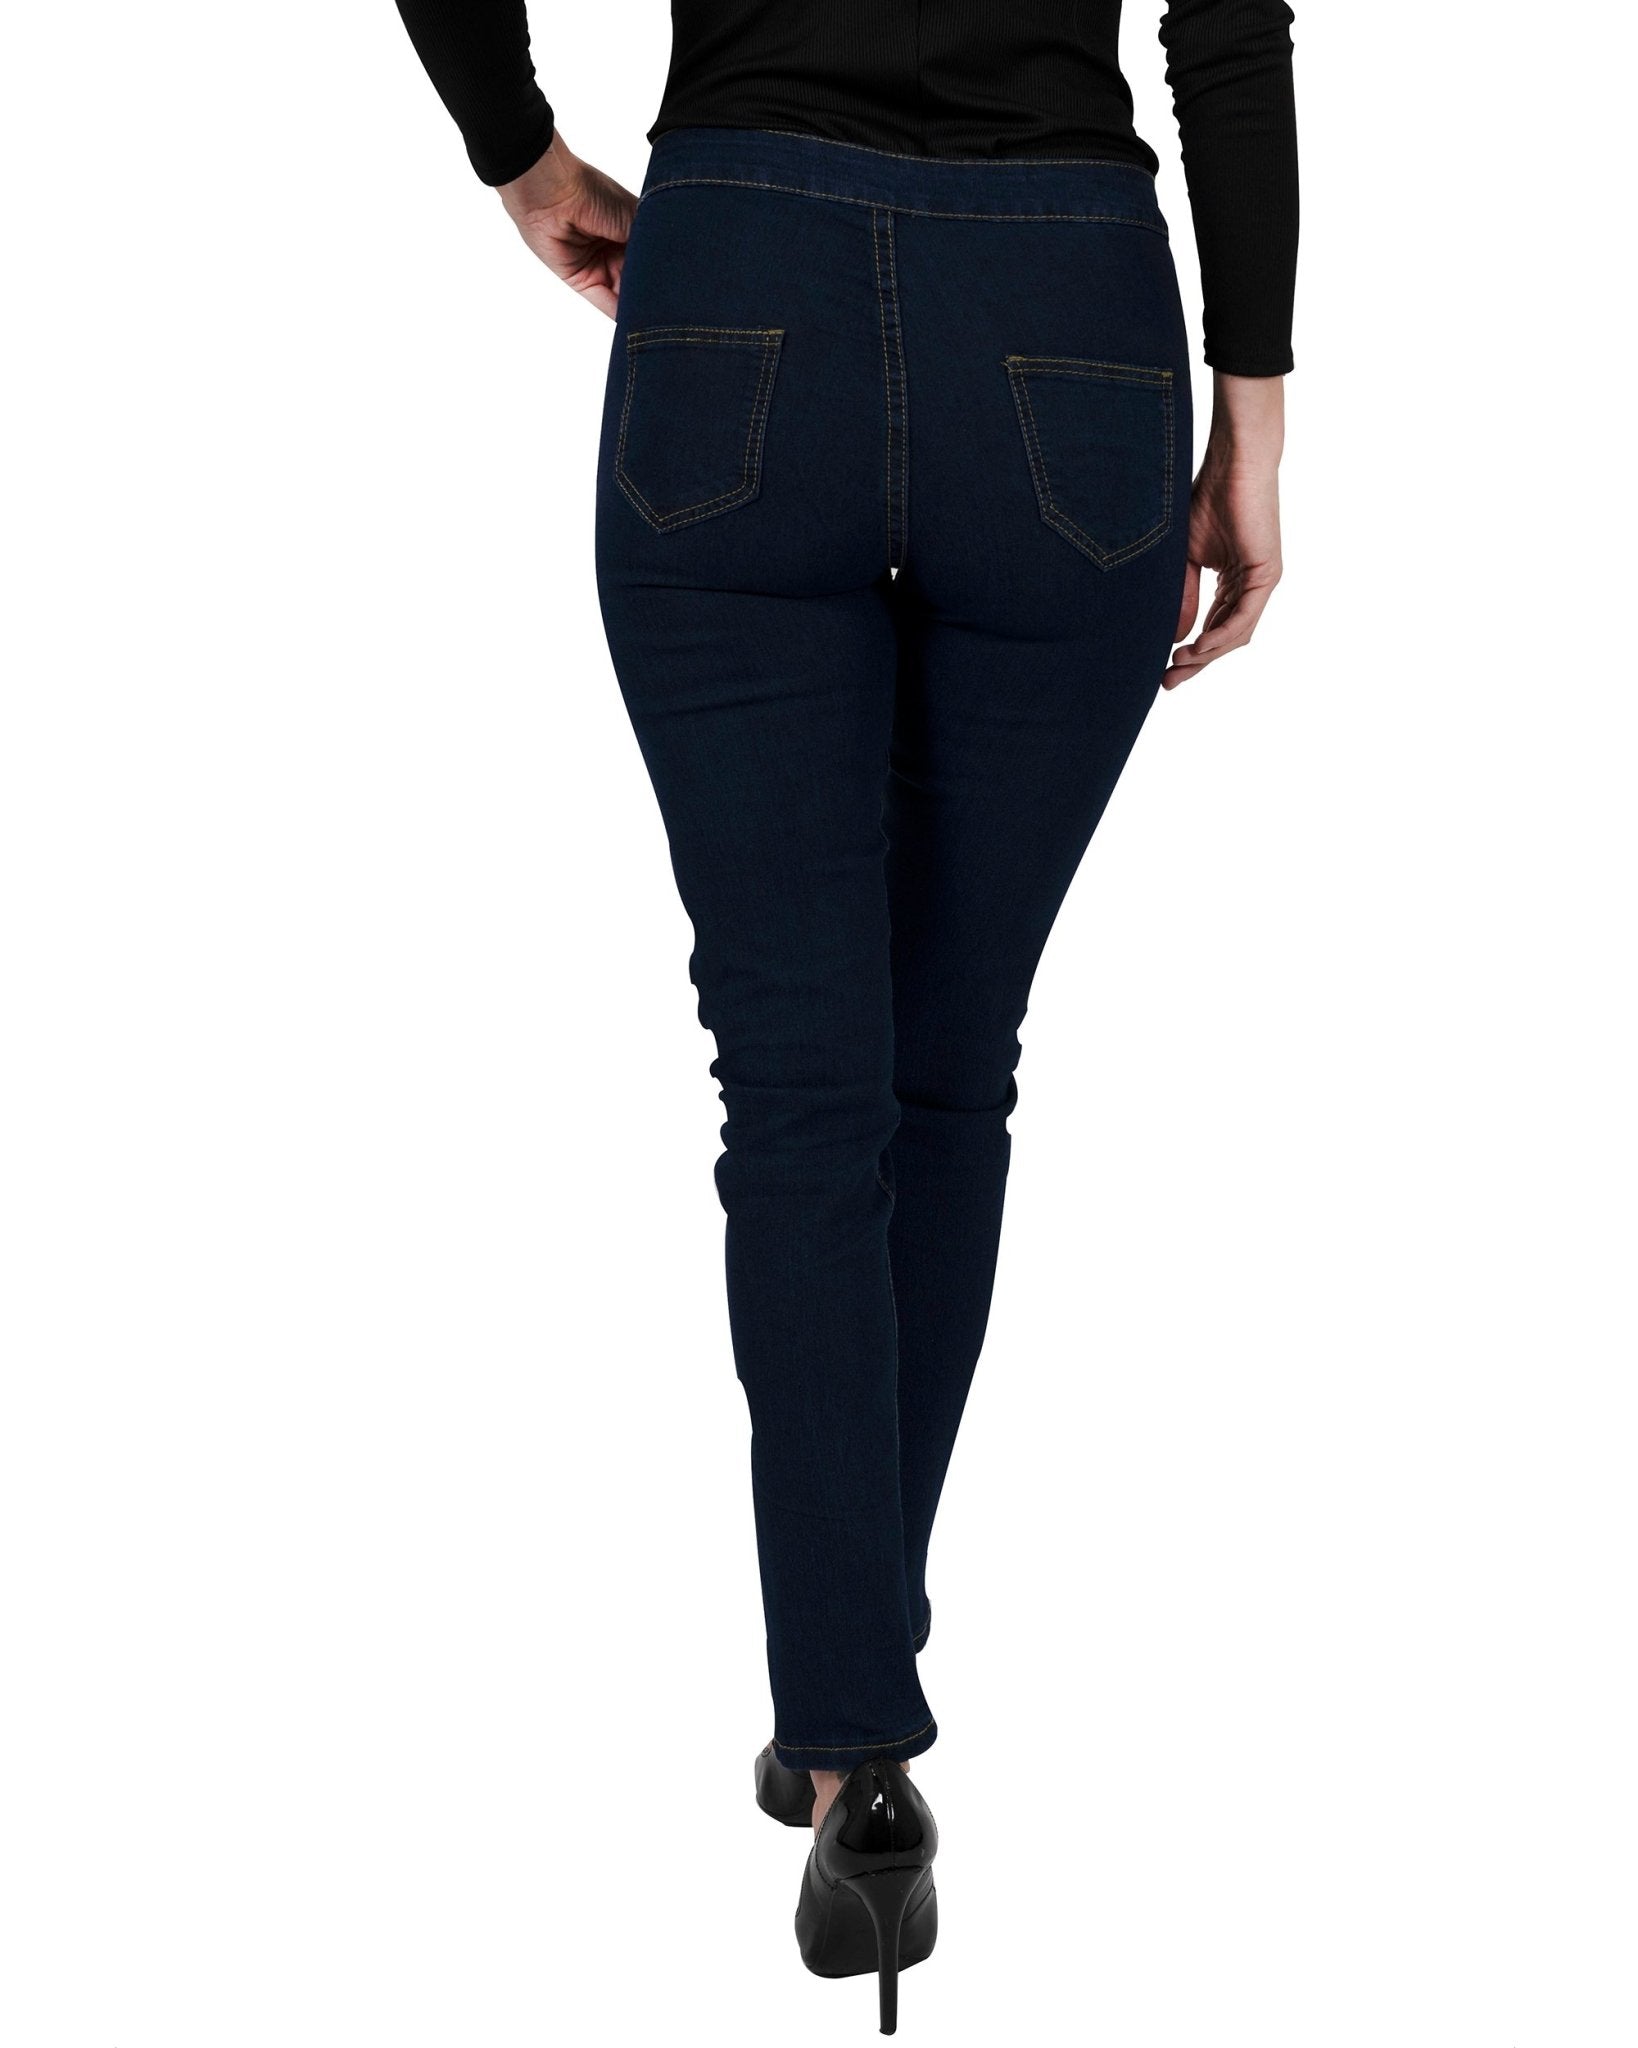 Women's Walden Skinny Jeans - Navy - Benn Burry